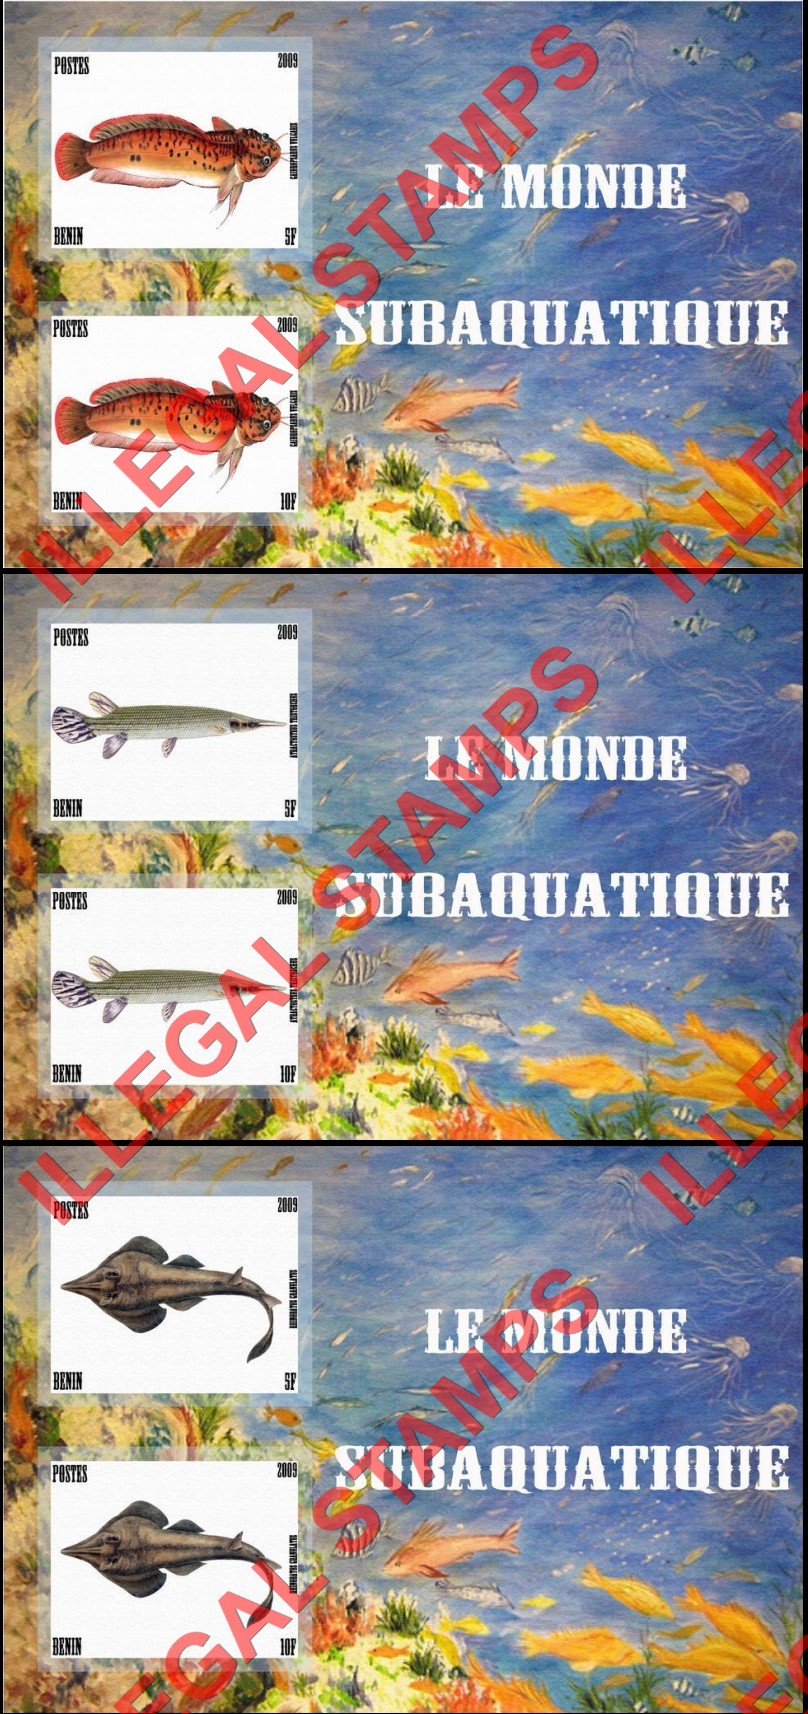 Benin 2009 Fish Illegal Stamp Souvenir Sheets of 2 (Part 2)